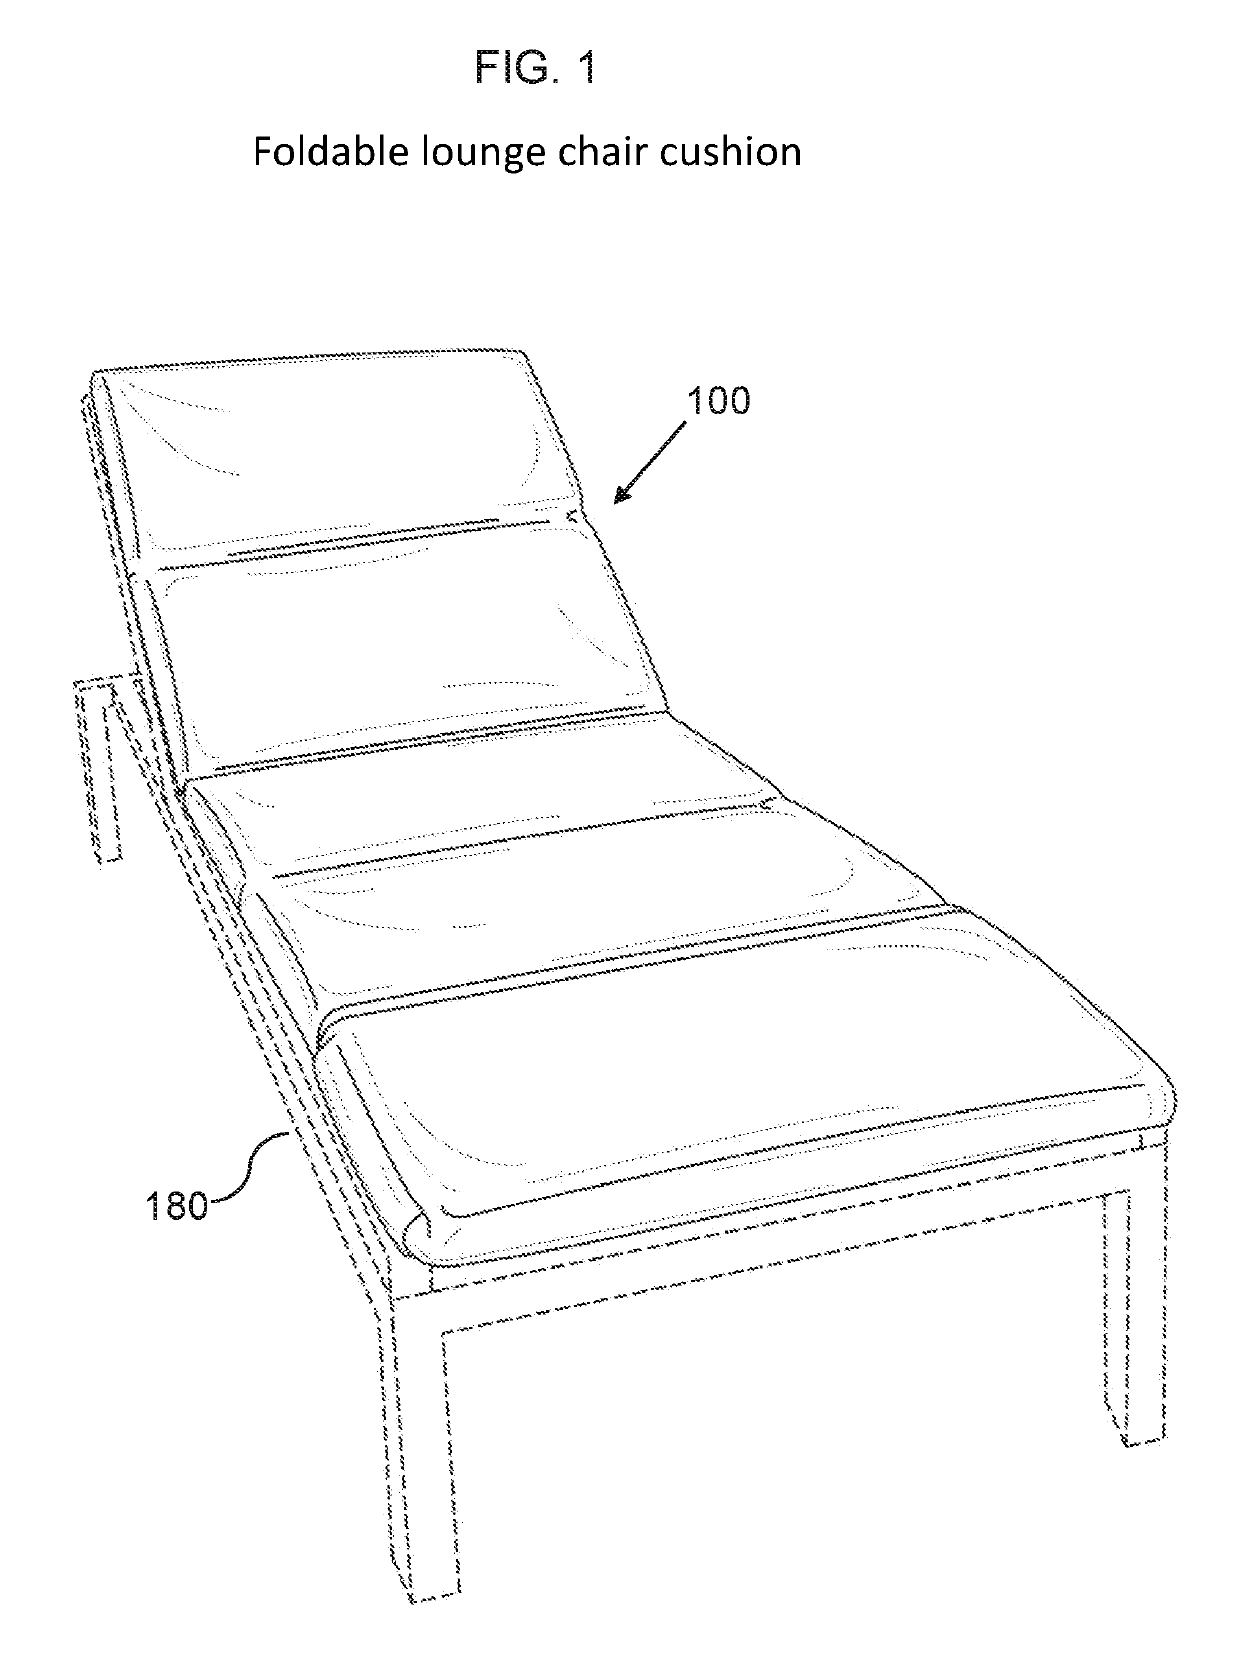 Foldable lounge chair cushion